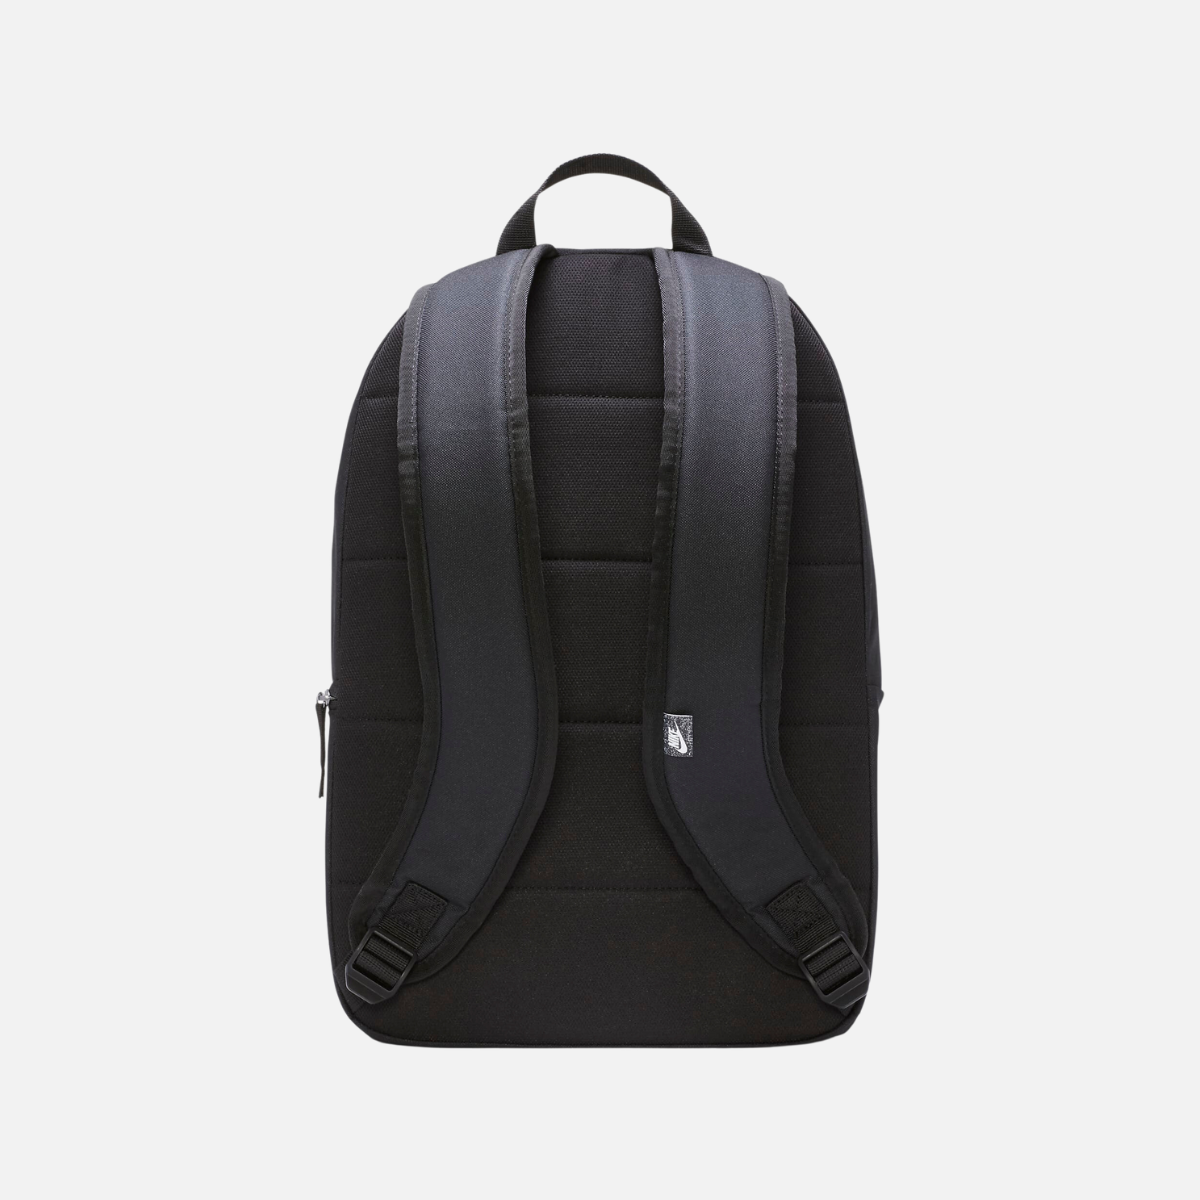 Nike Heritage Backpack (25L) -Black/Black/White